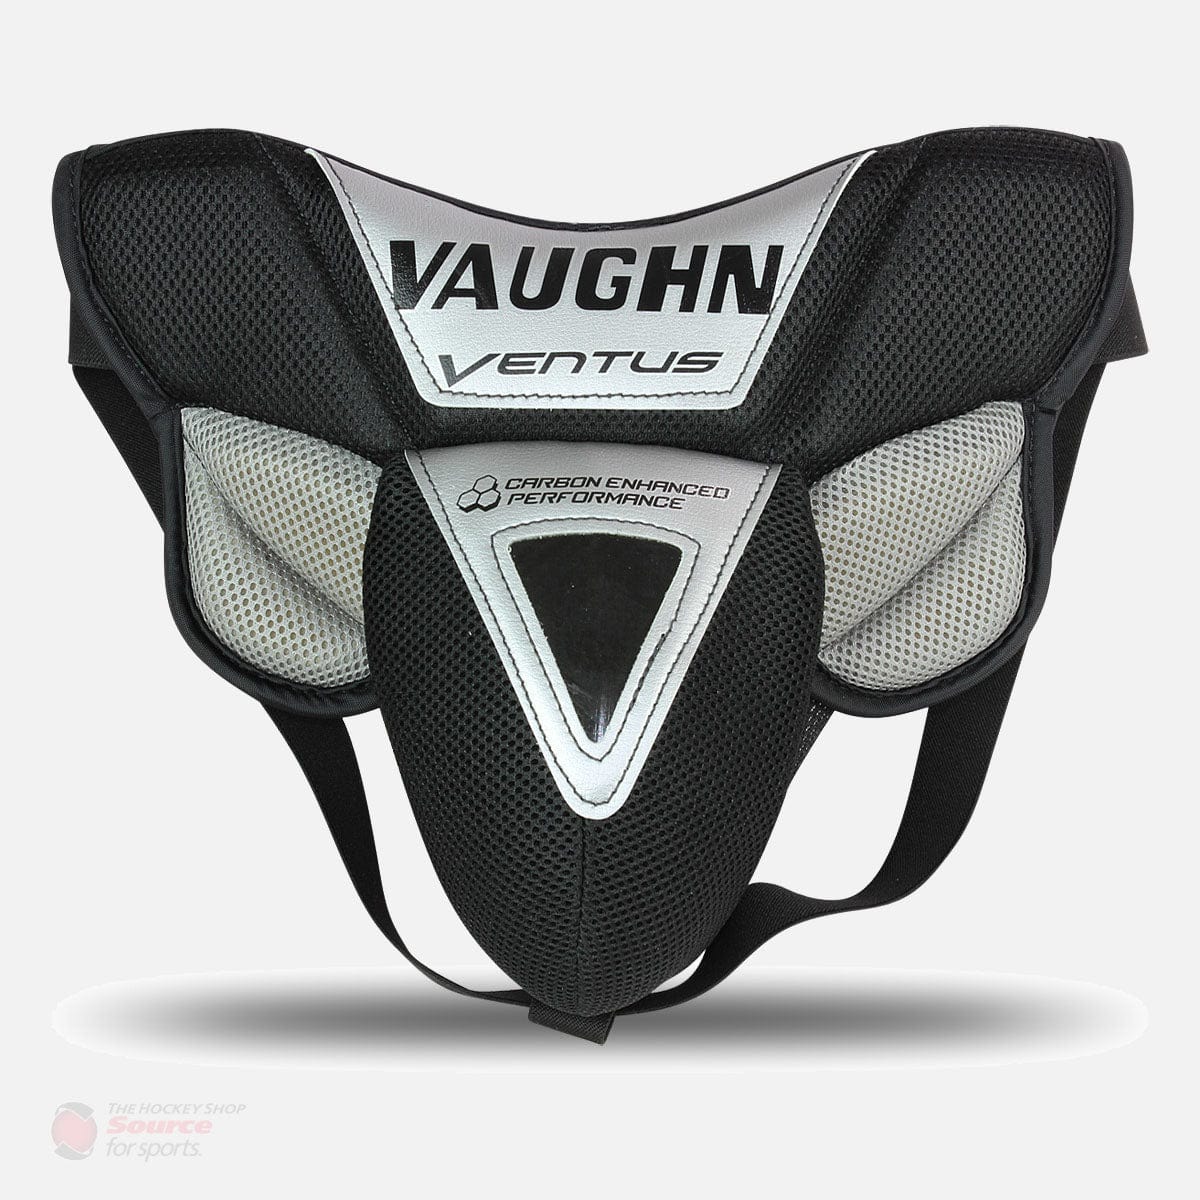 Vaughn Ventus Pro Carbon Intermediate Goalie Jock